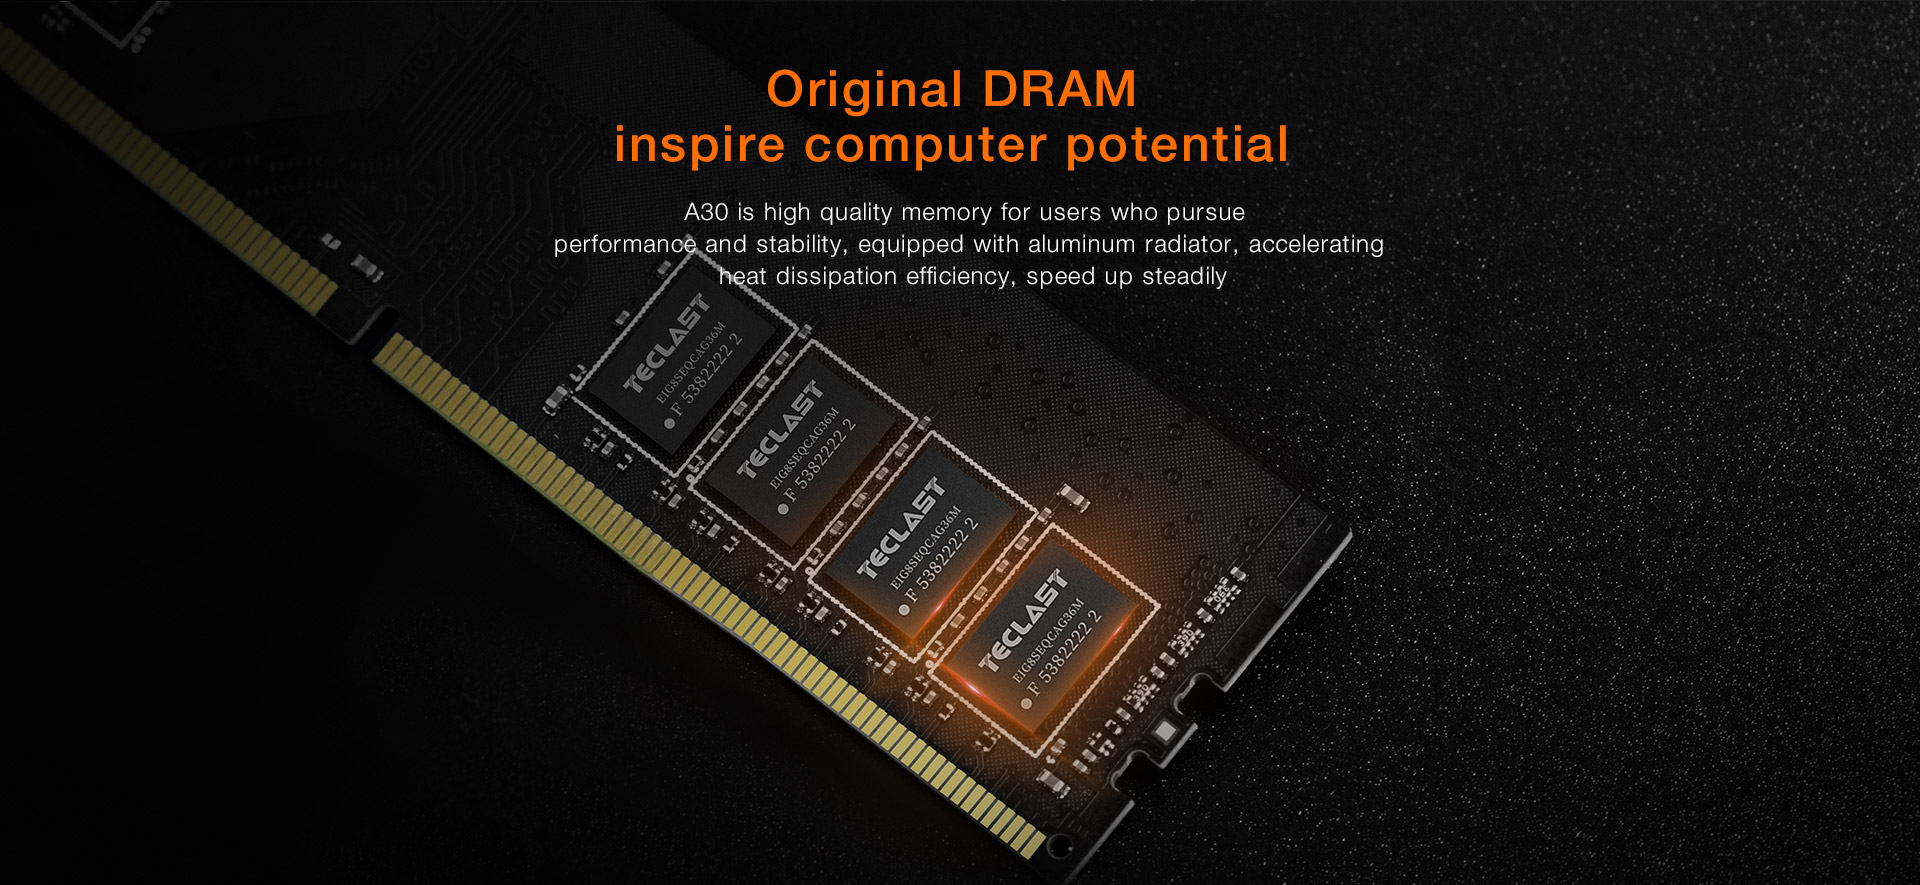 Teclast A30 DDR4 8G 2400Mhz Desktop Computer Memory 288Pin DIMM PC Gaming Memory 9